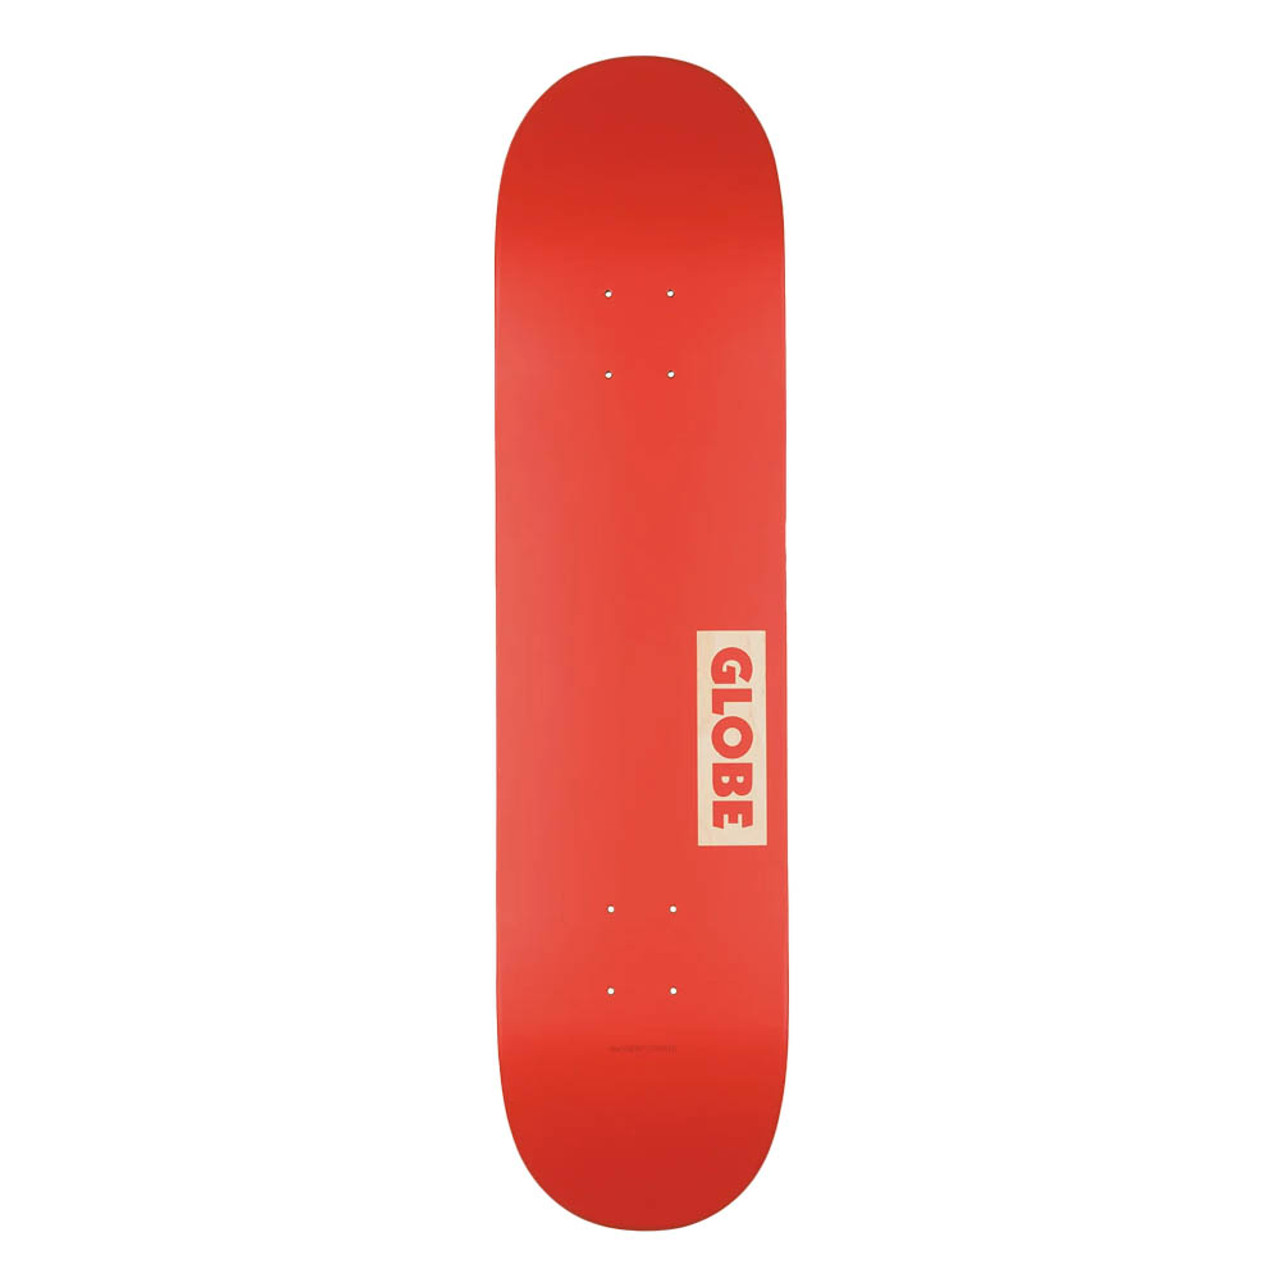 GLOBE Goodstock Red Skateboard Deck 7.75